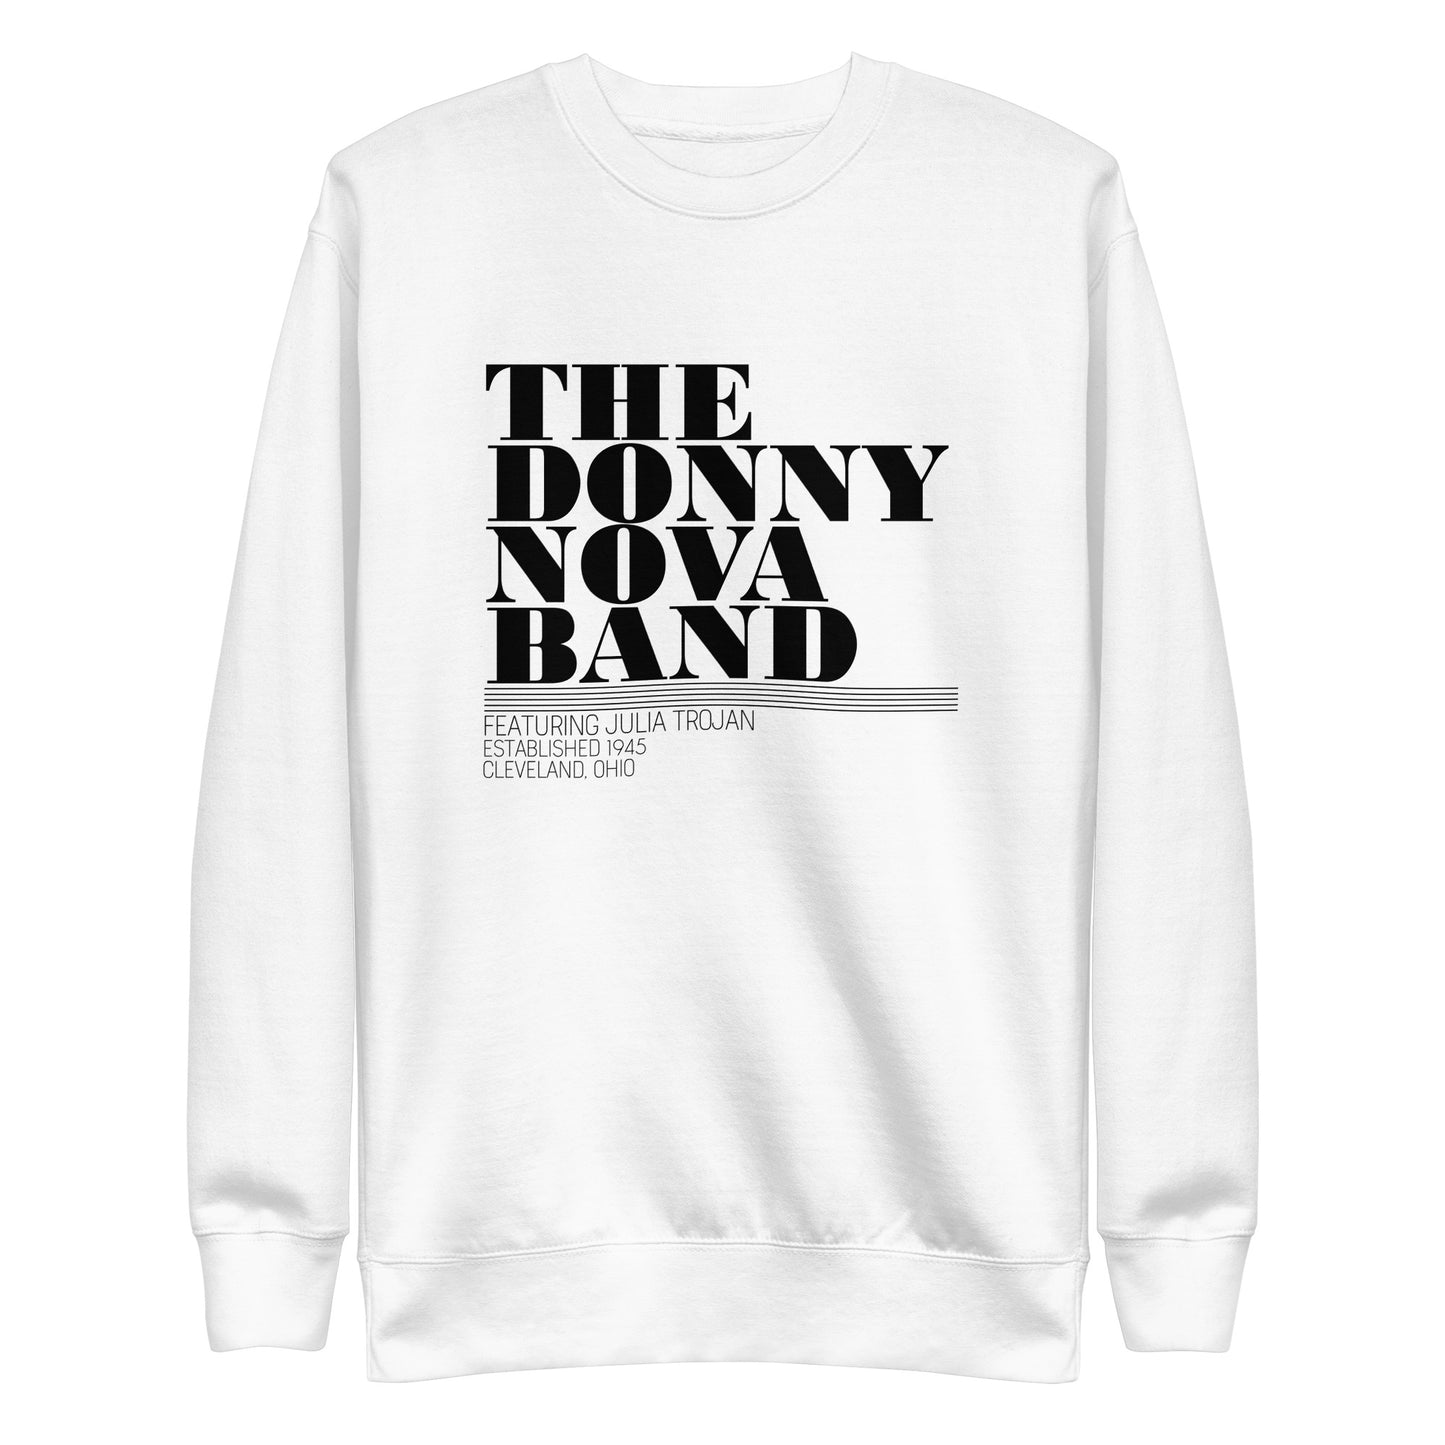 Band Title Premium Sweatshirt (White)